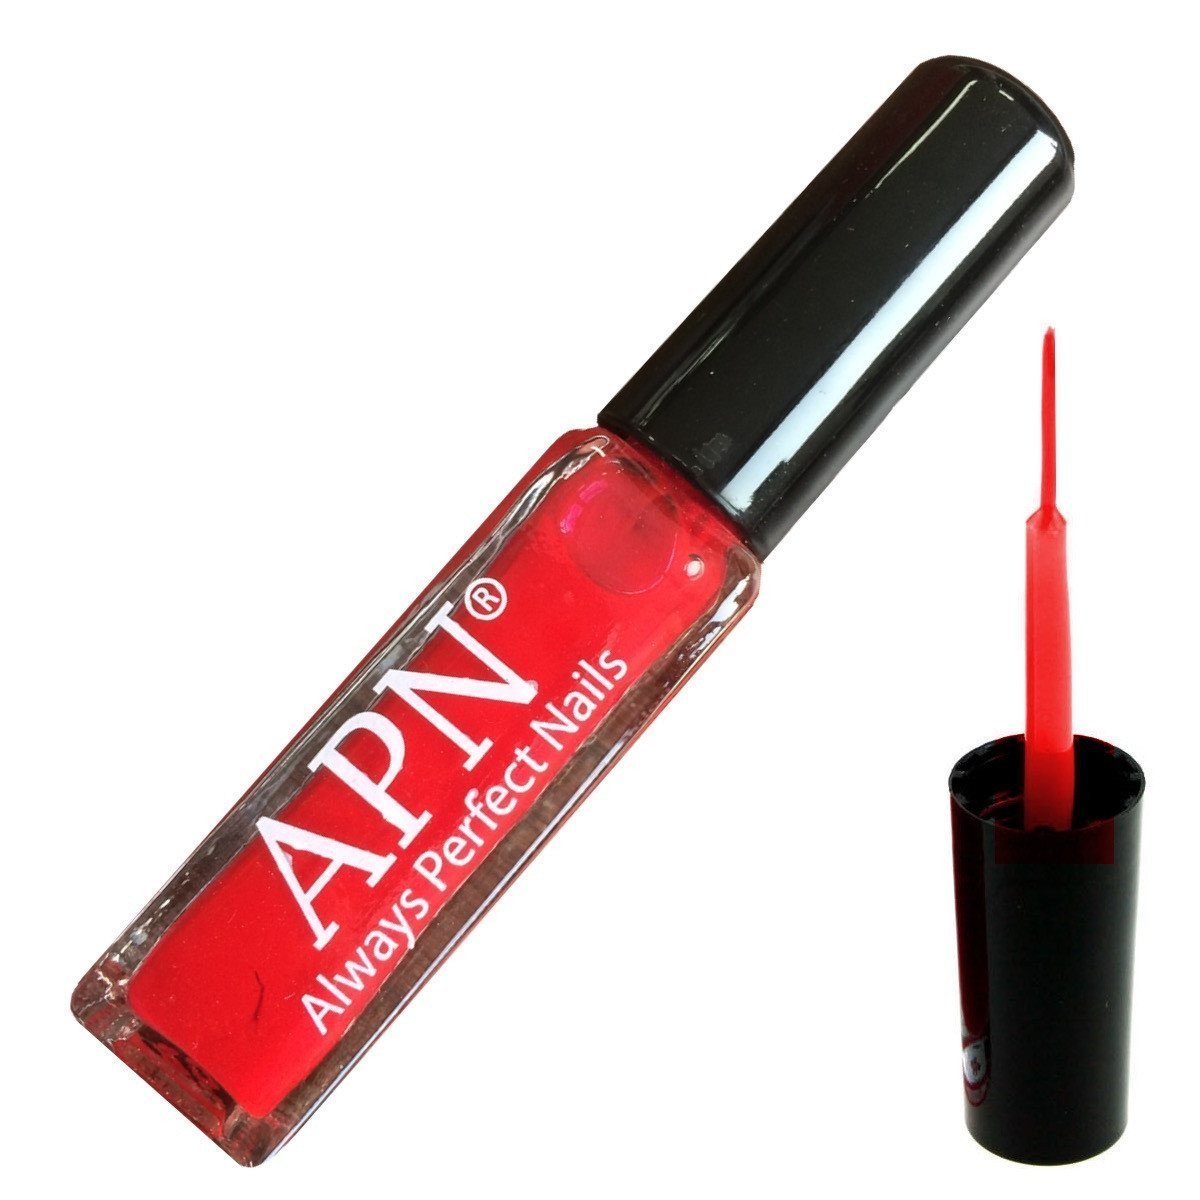 APN Nail Art Liner for Nail Polish Design line - Red - beautyhair.co.ukNails